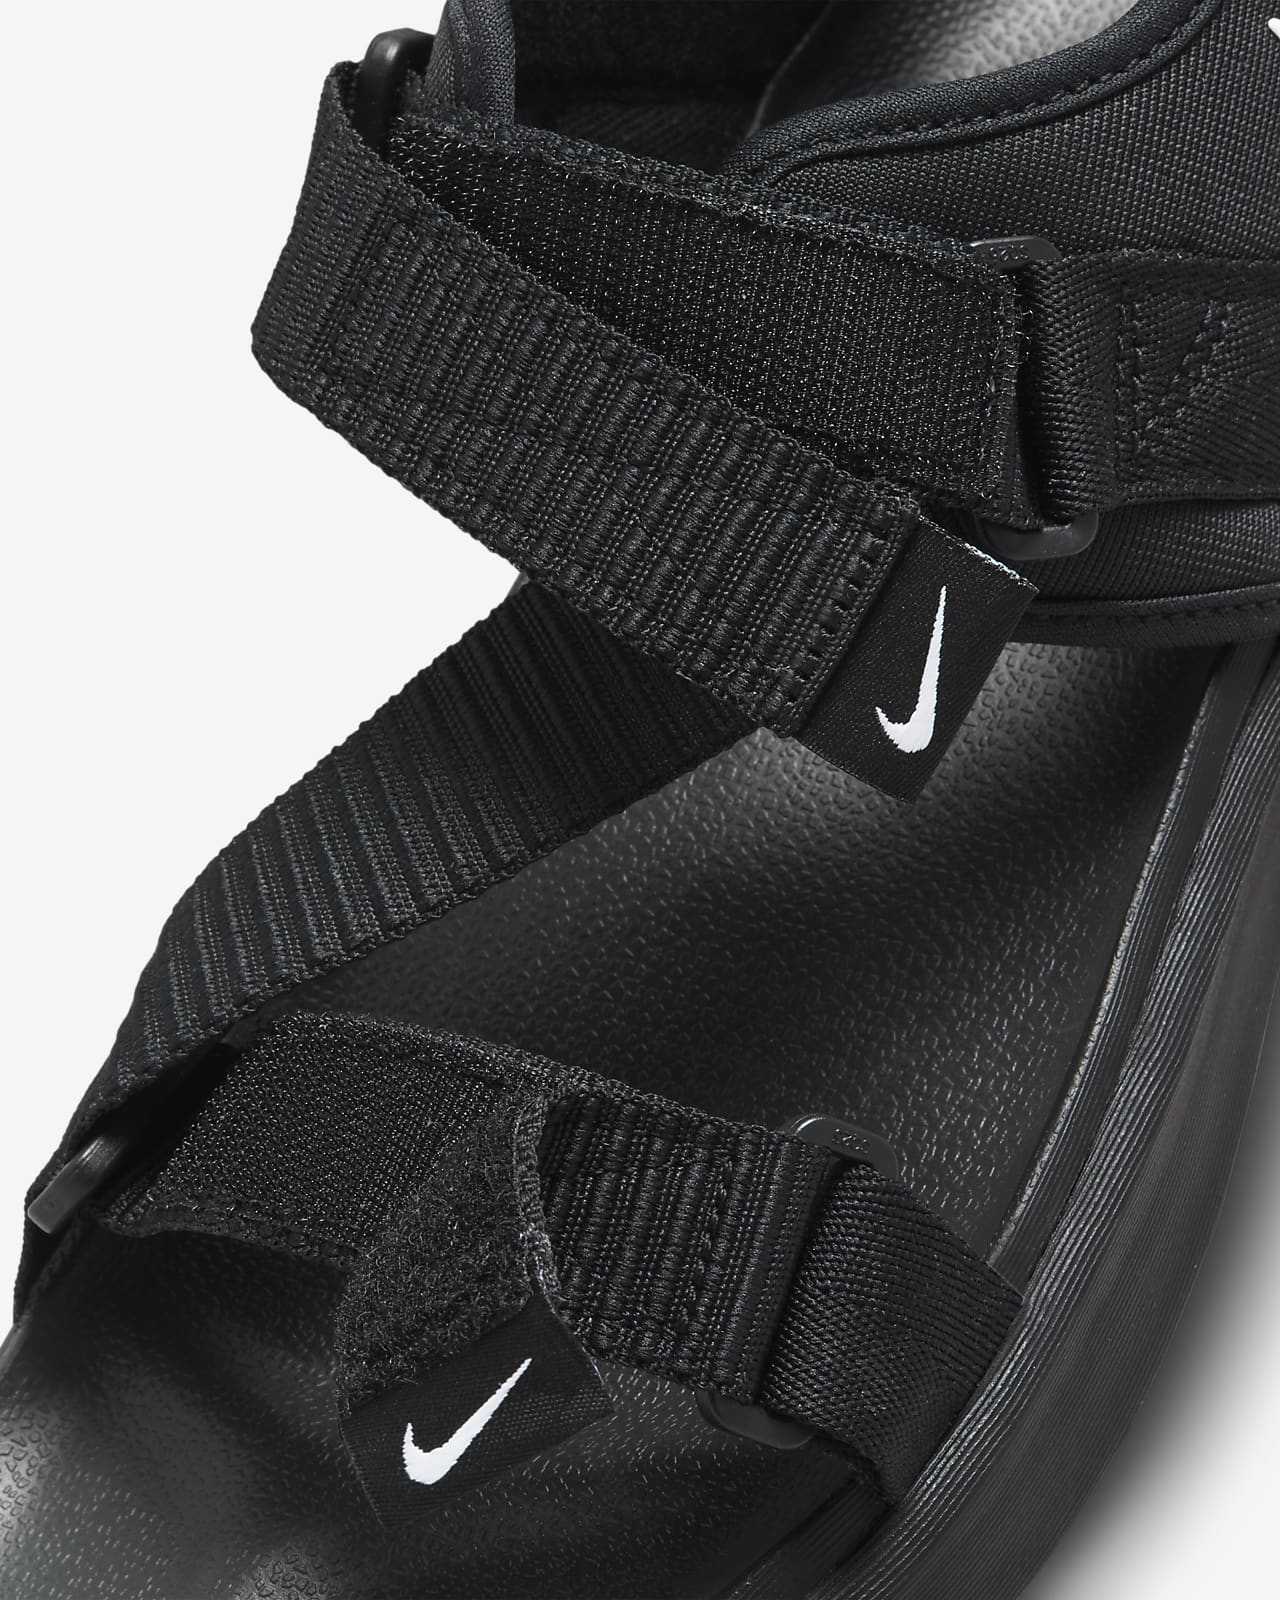 Mens Black Sandals - Shoes | Kohl's-hkpdtq2012.edu.vn